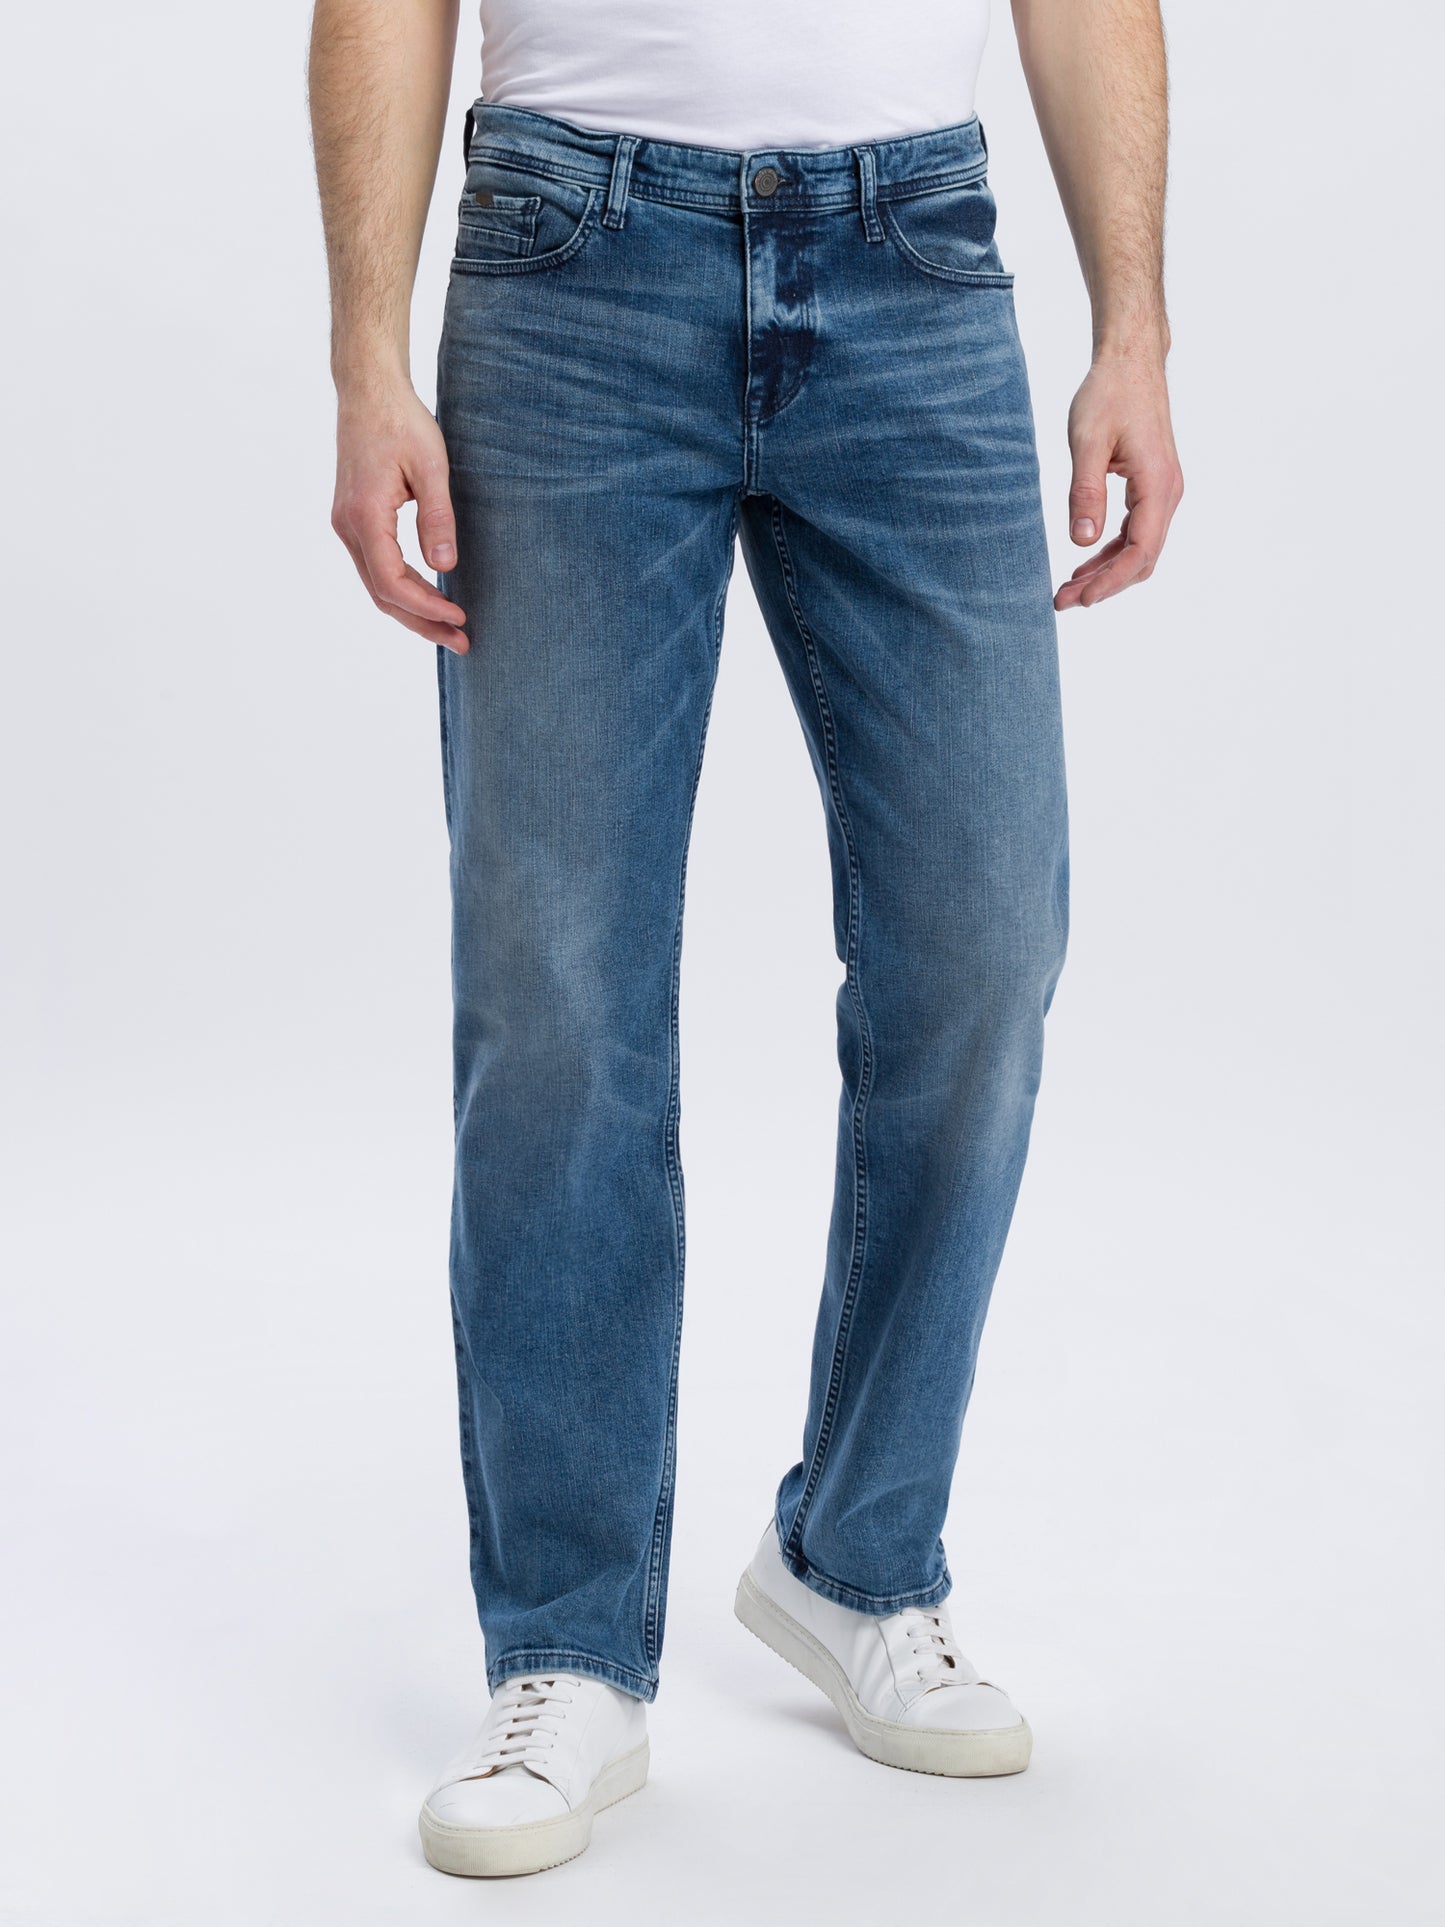 Antonio Herren Jeans Relaxed Fit Regular Waist Straight Leg mittelblau